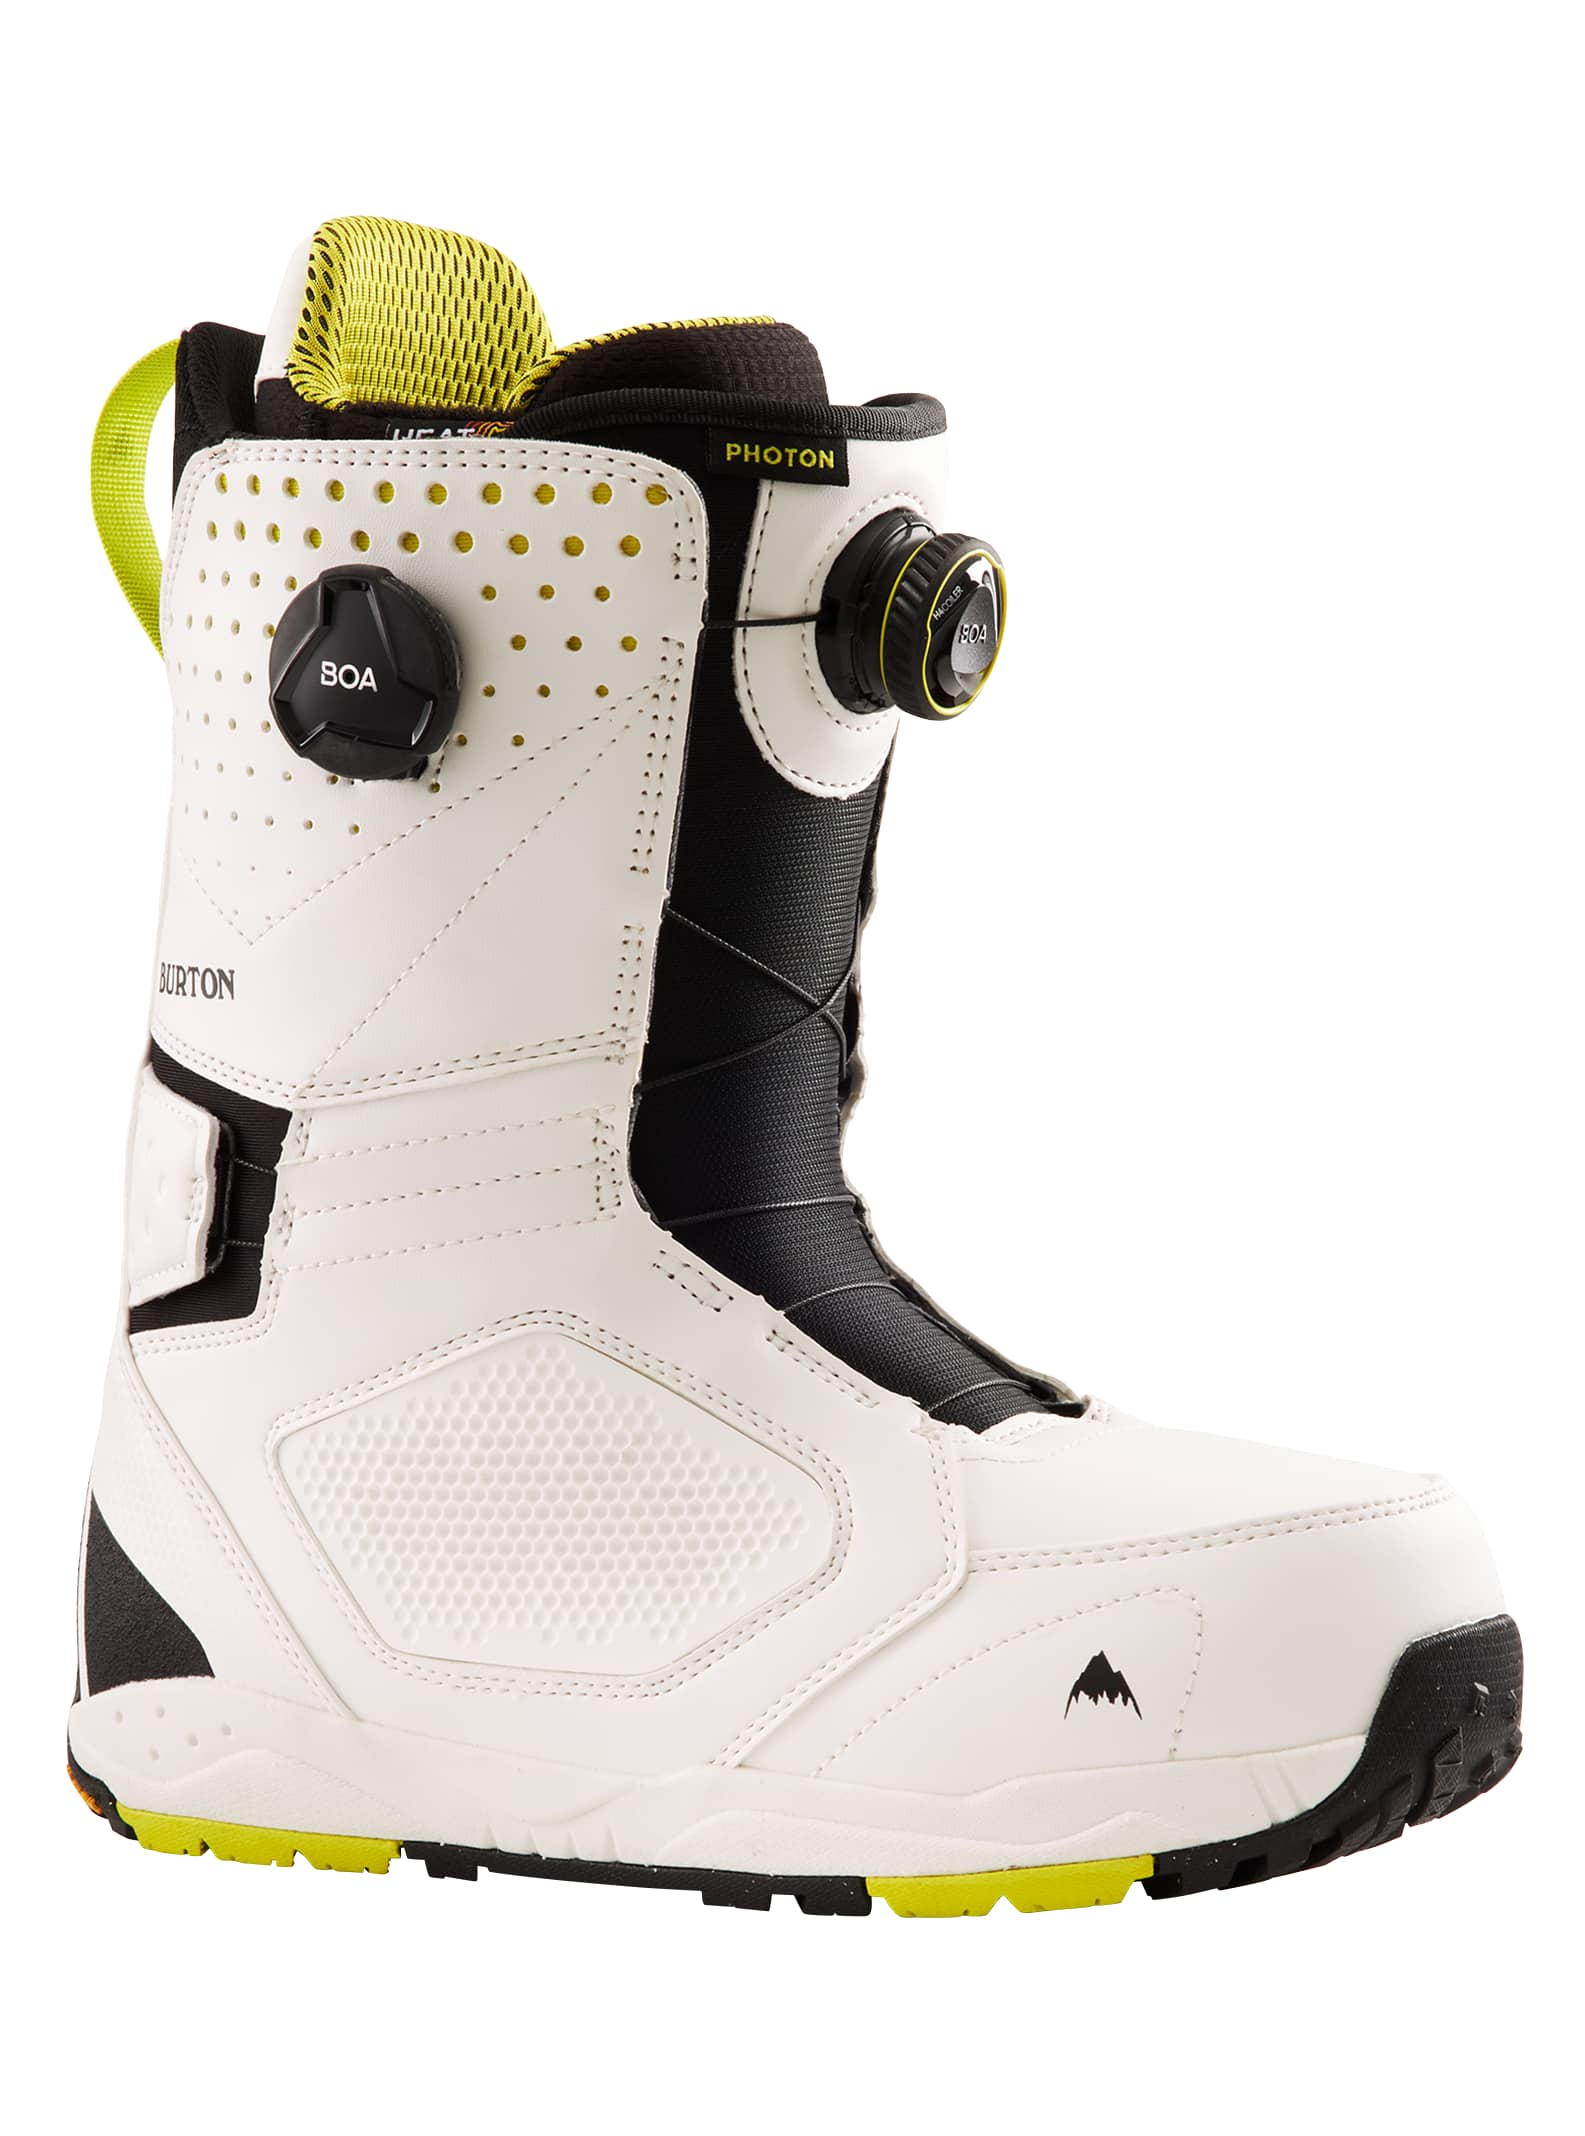 Men's Burton Photon BOA® Snowboard Boots